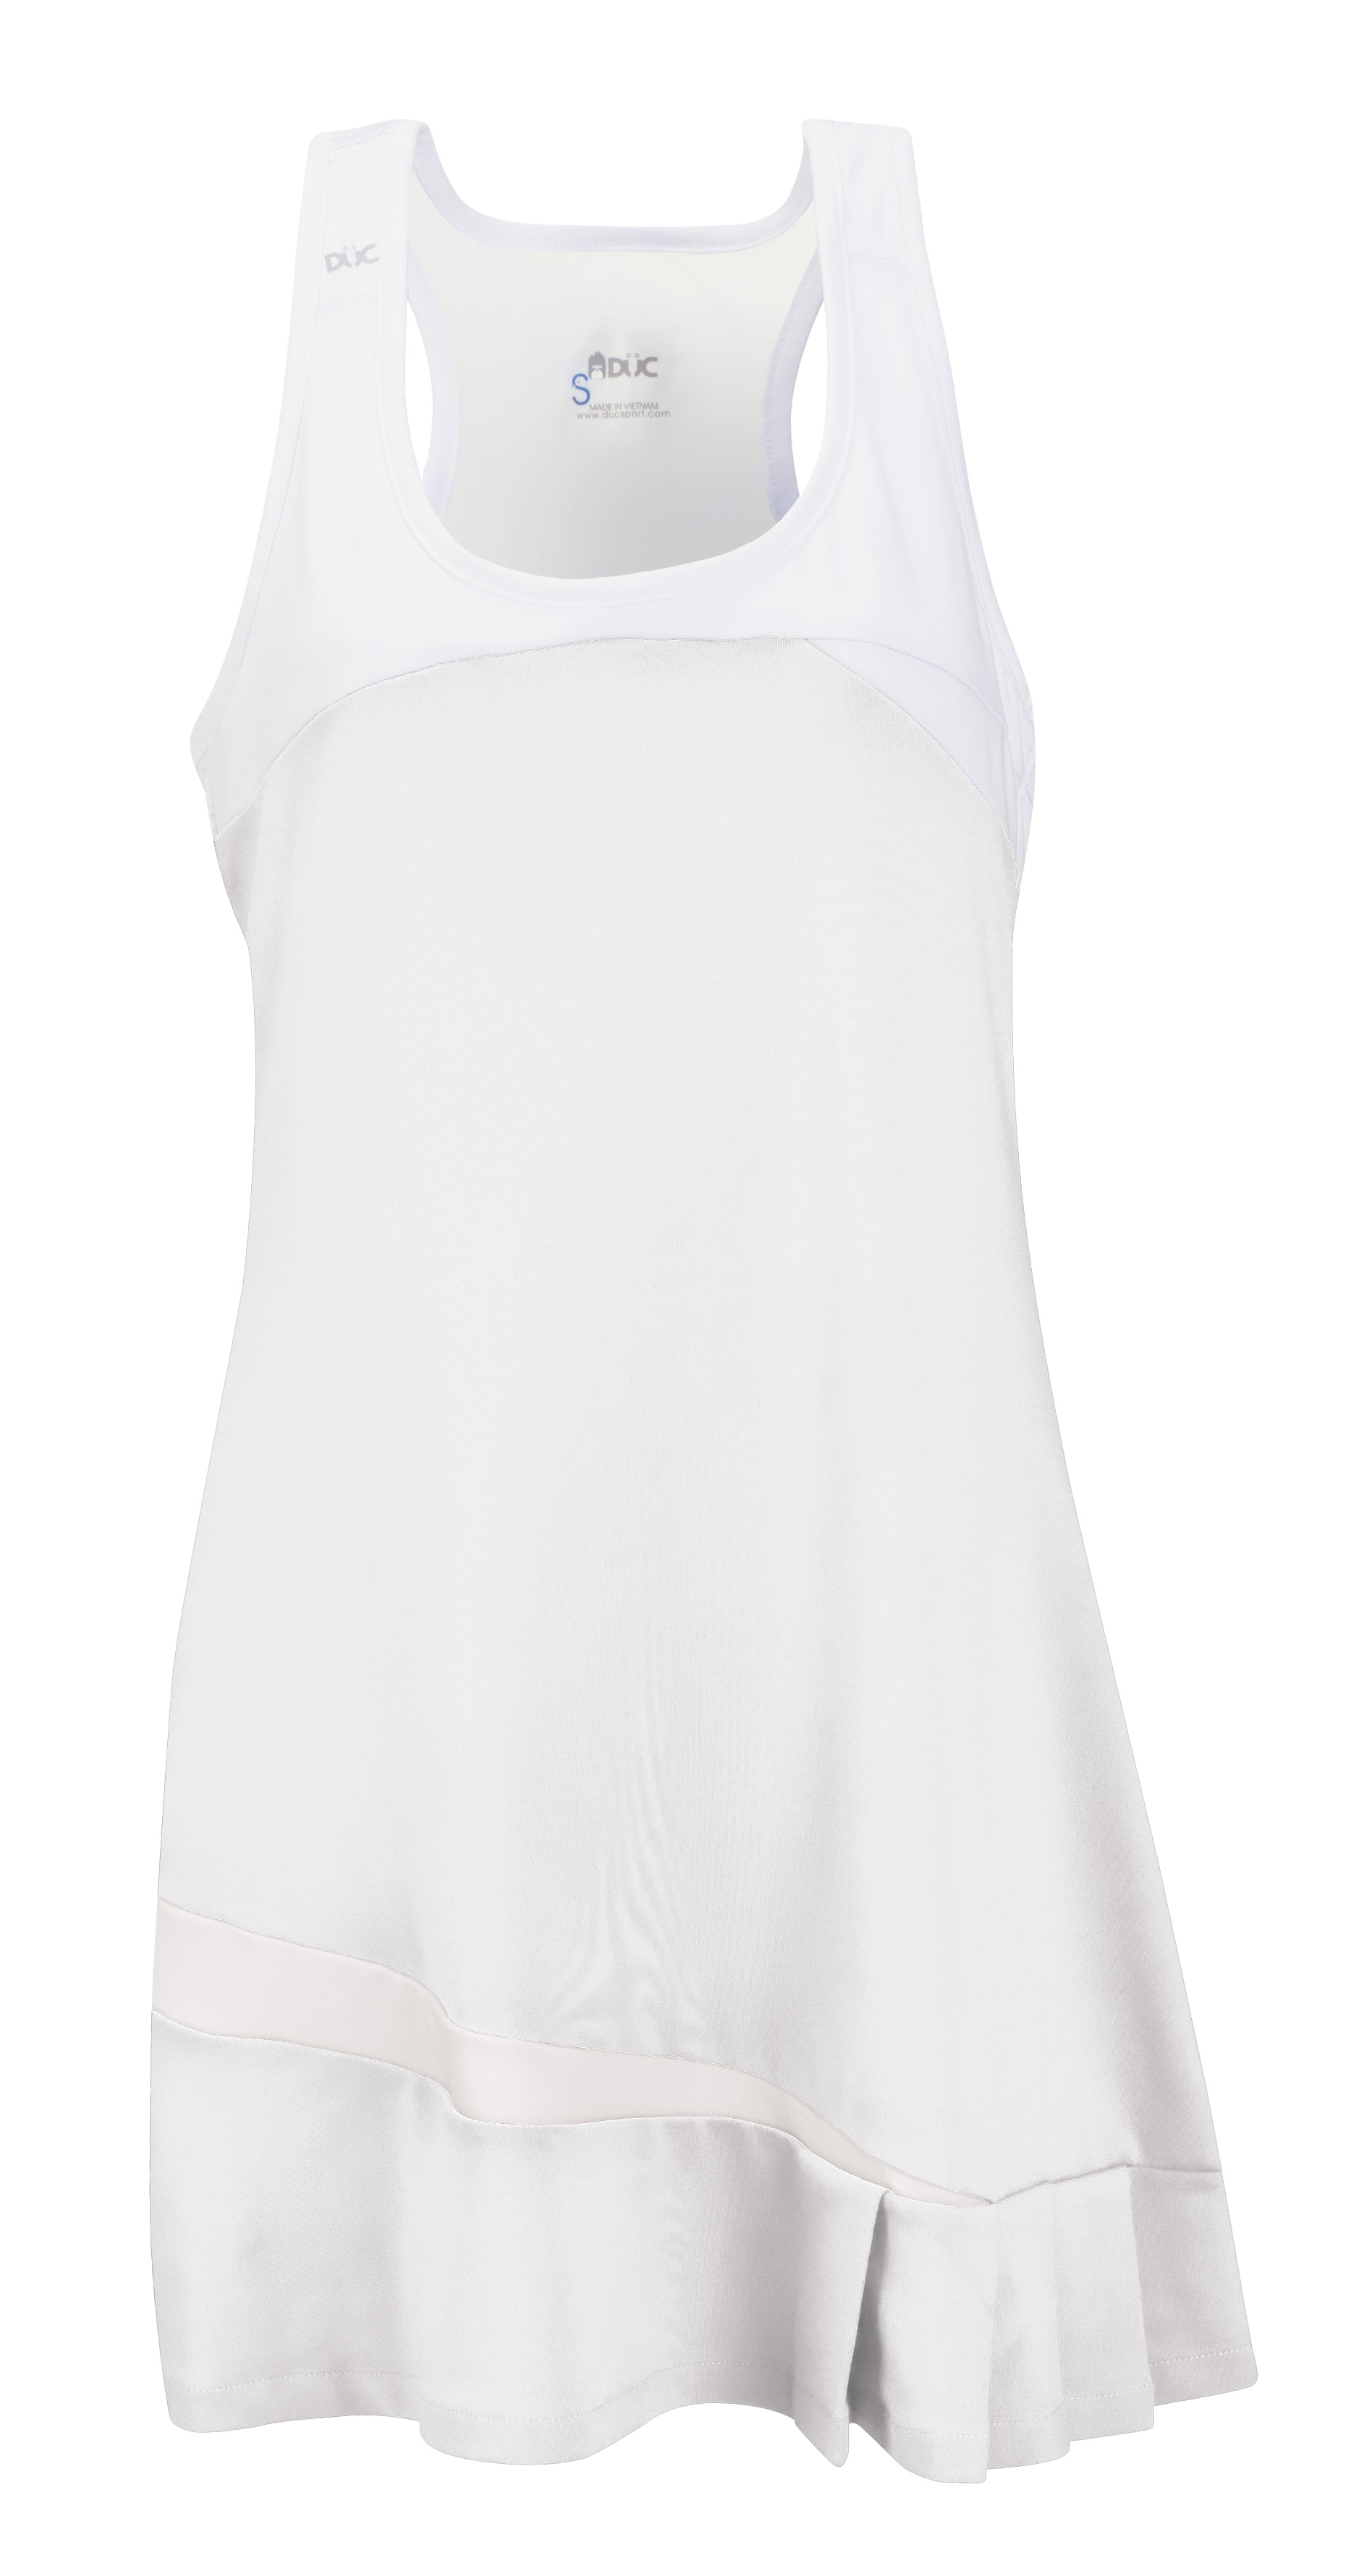 DUC Fire Women&amp;apos;s Tennis Dress (White)